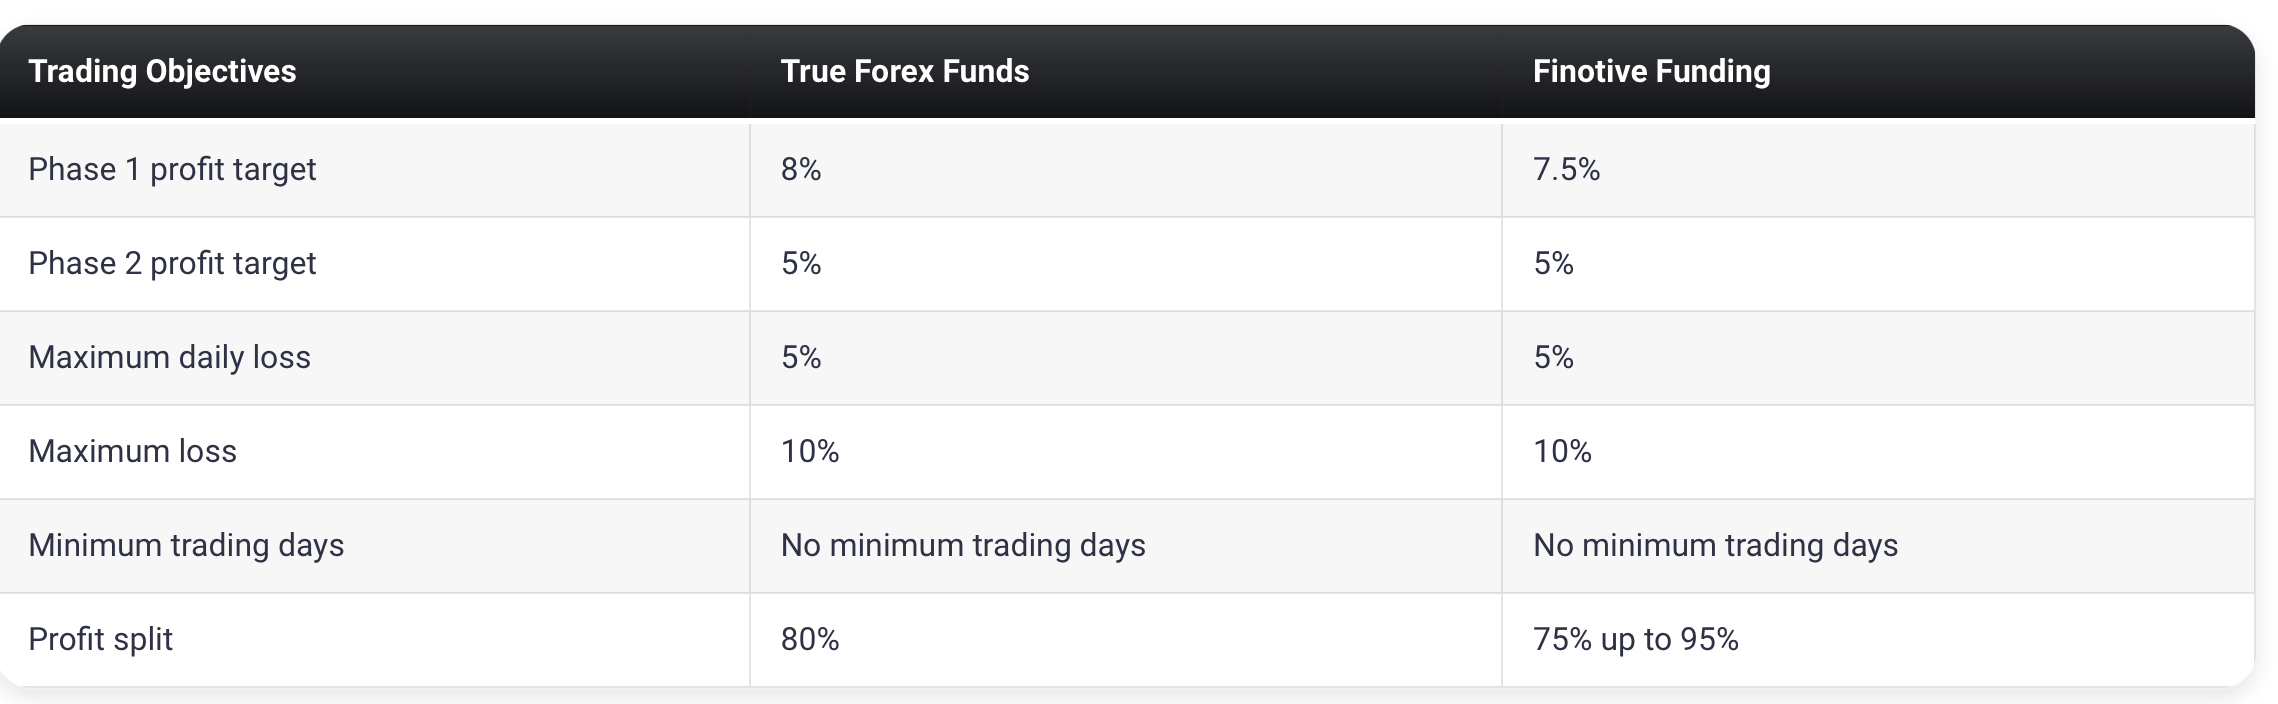 5True Forex Funds